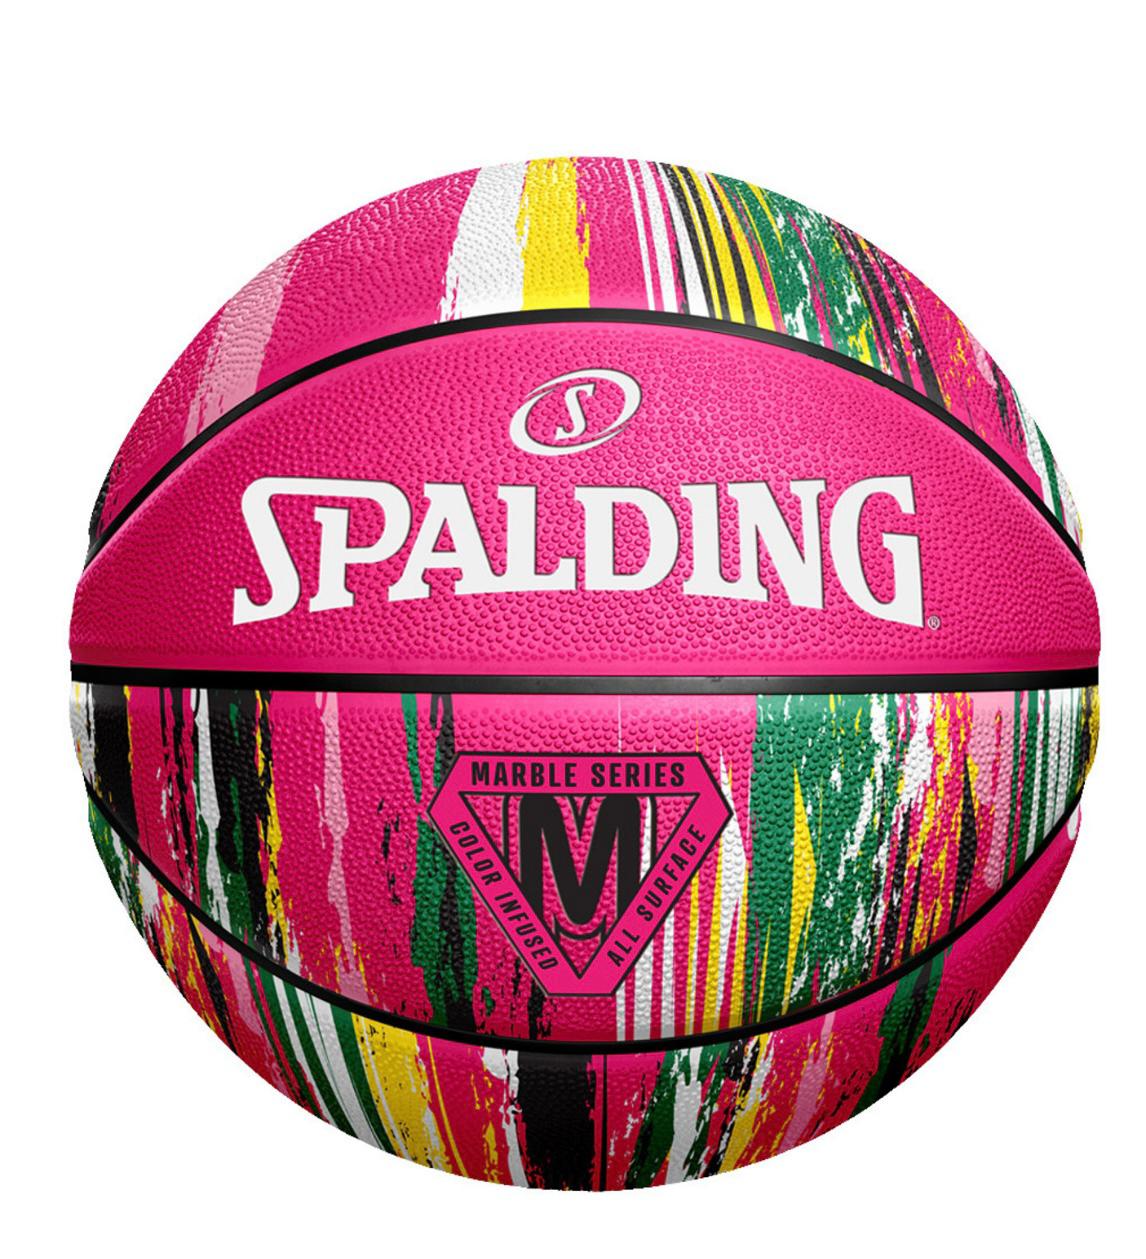 Spalding Marble Series Pink Basketball